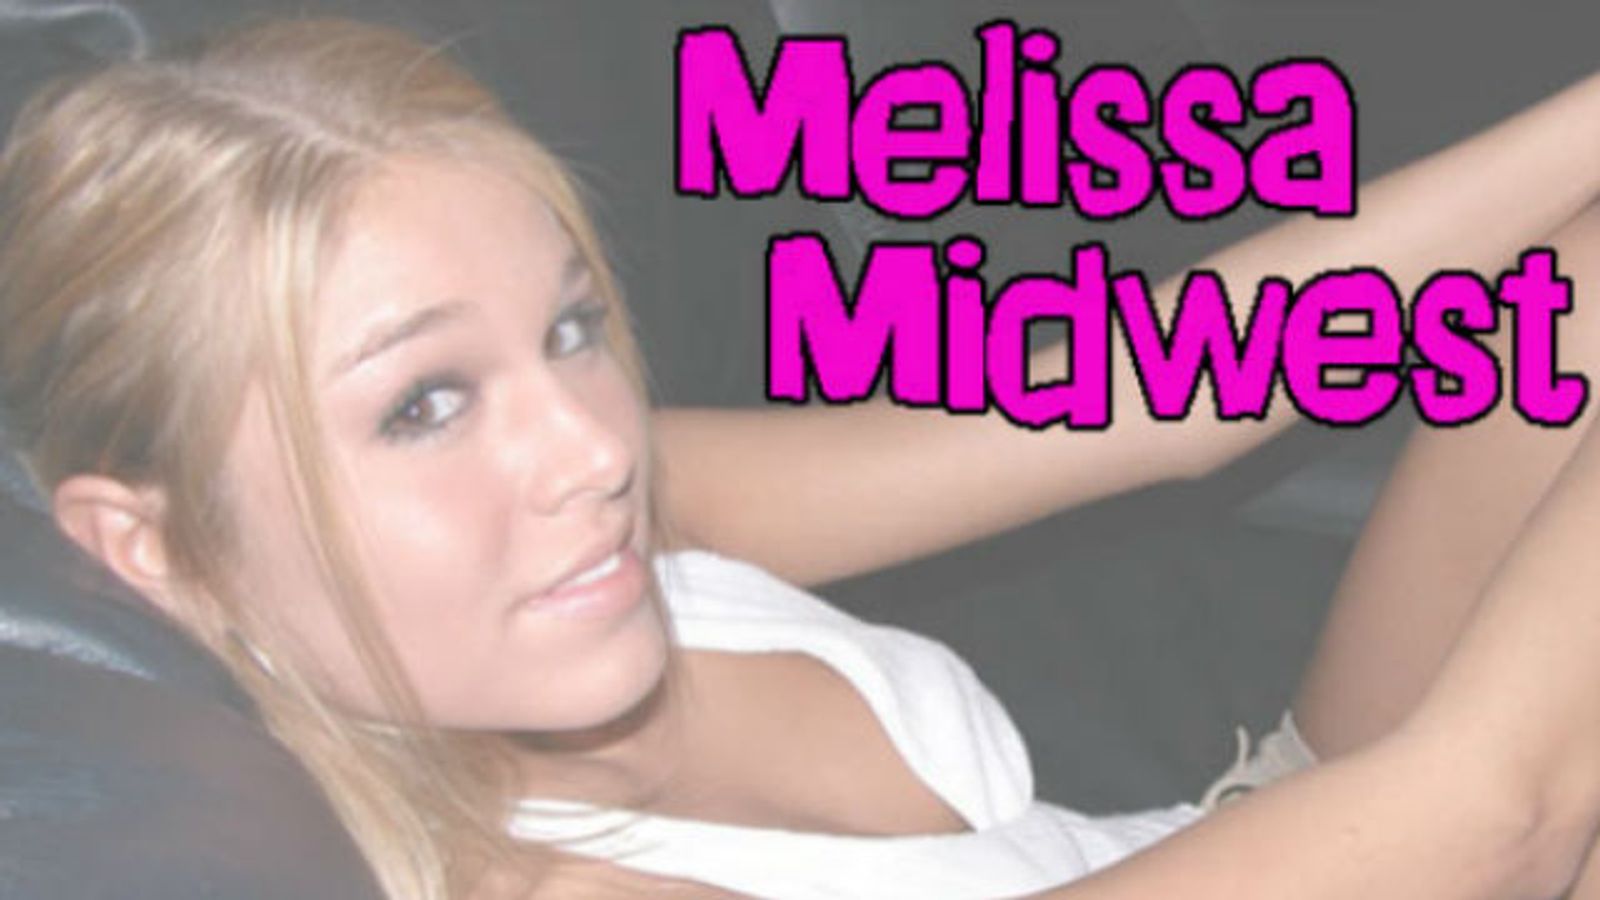 Melissa midwest